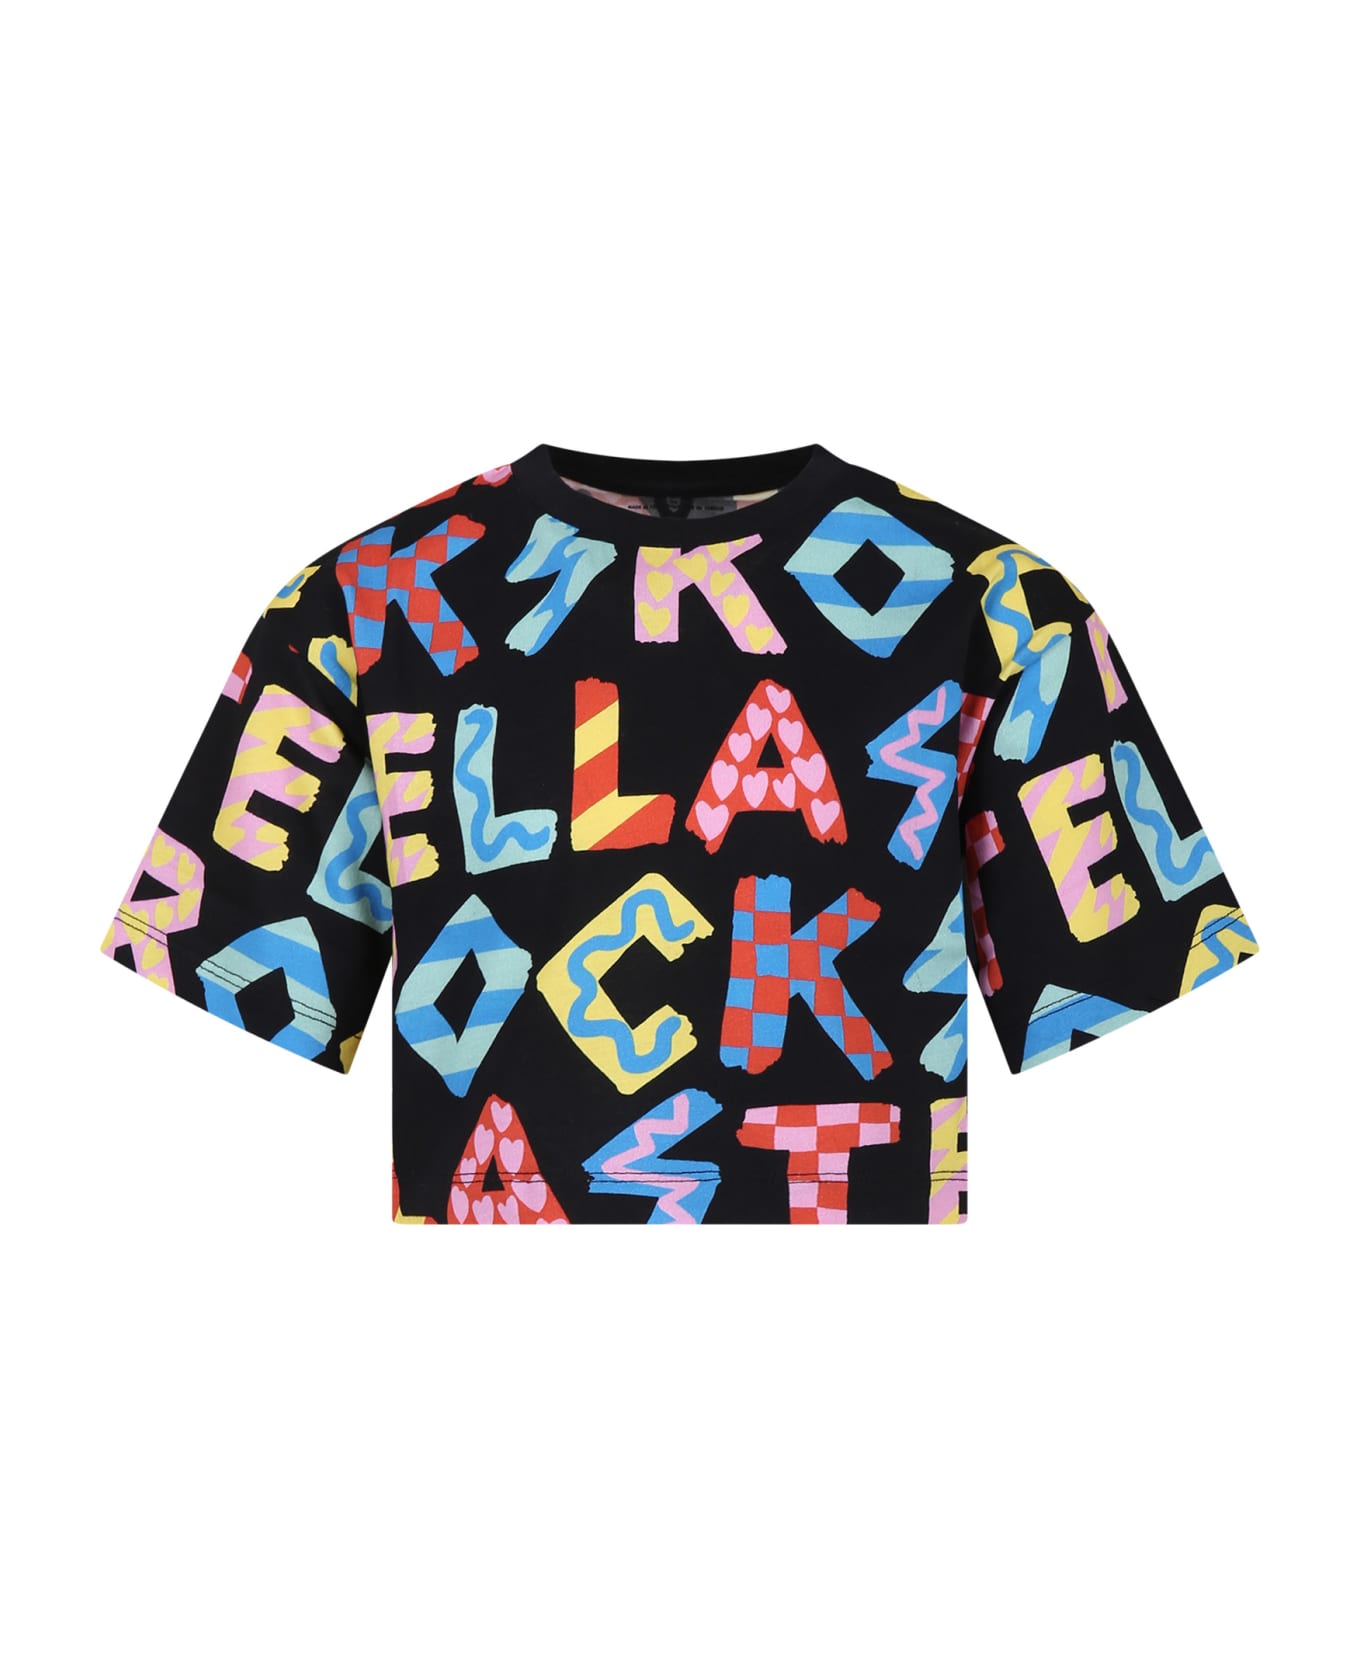 Stella McCartney Kids Black T-shirt For Girl With All-over Multicolor Print - Black